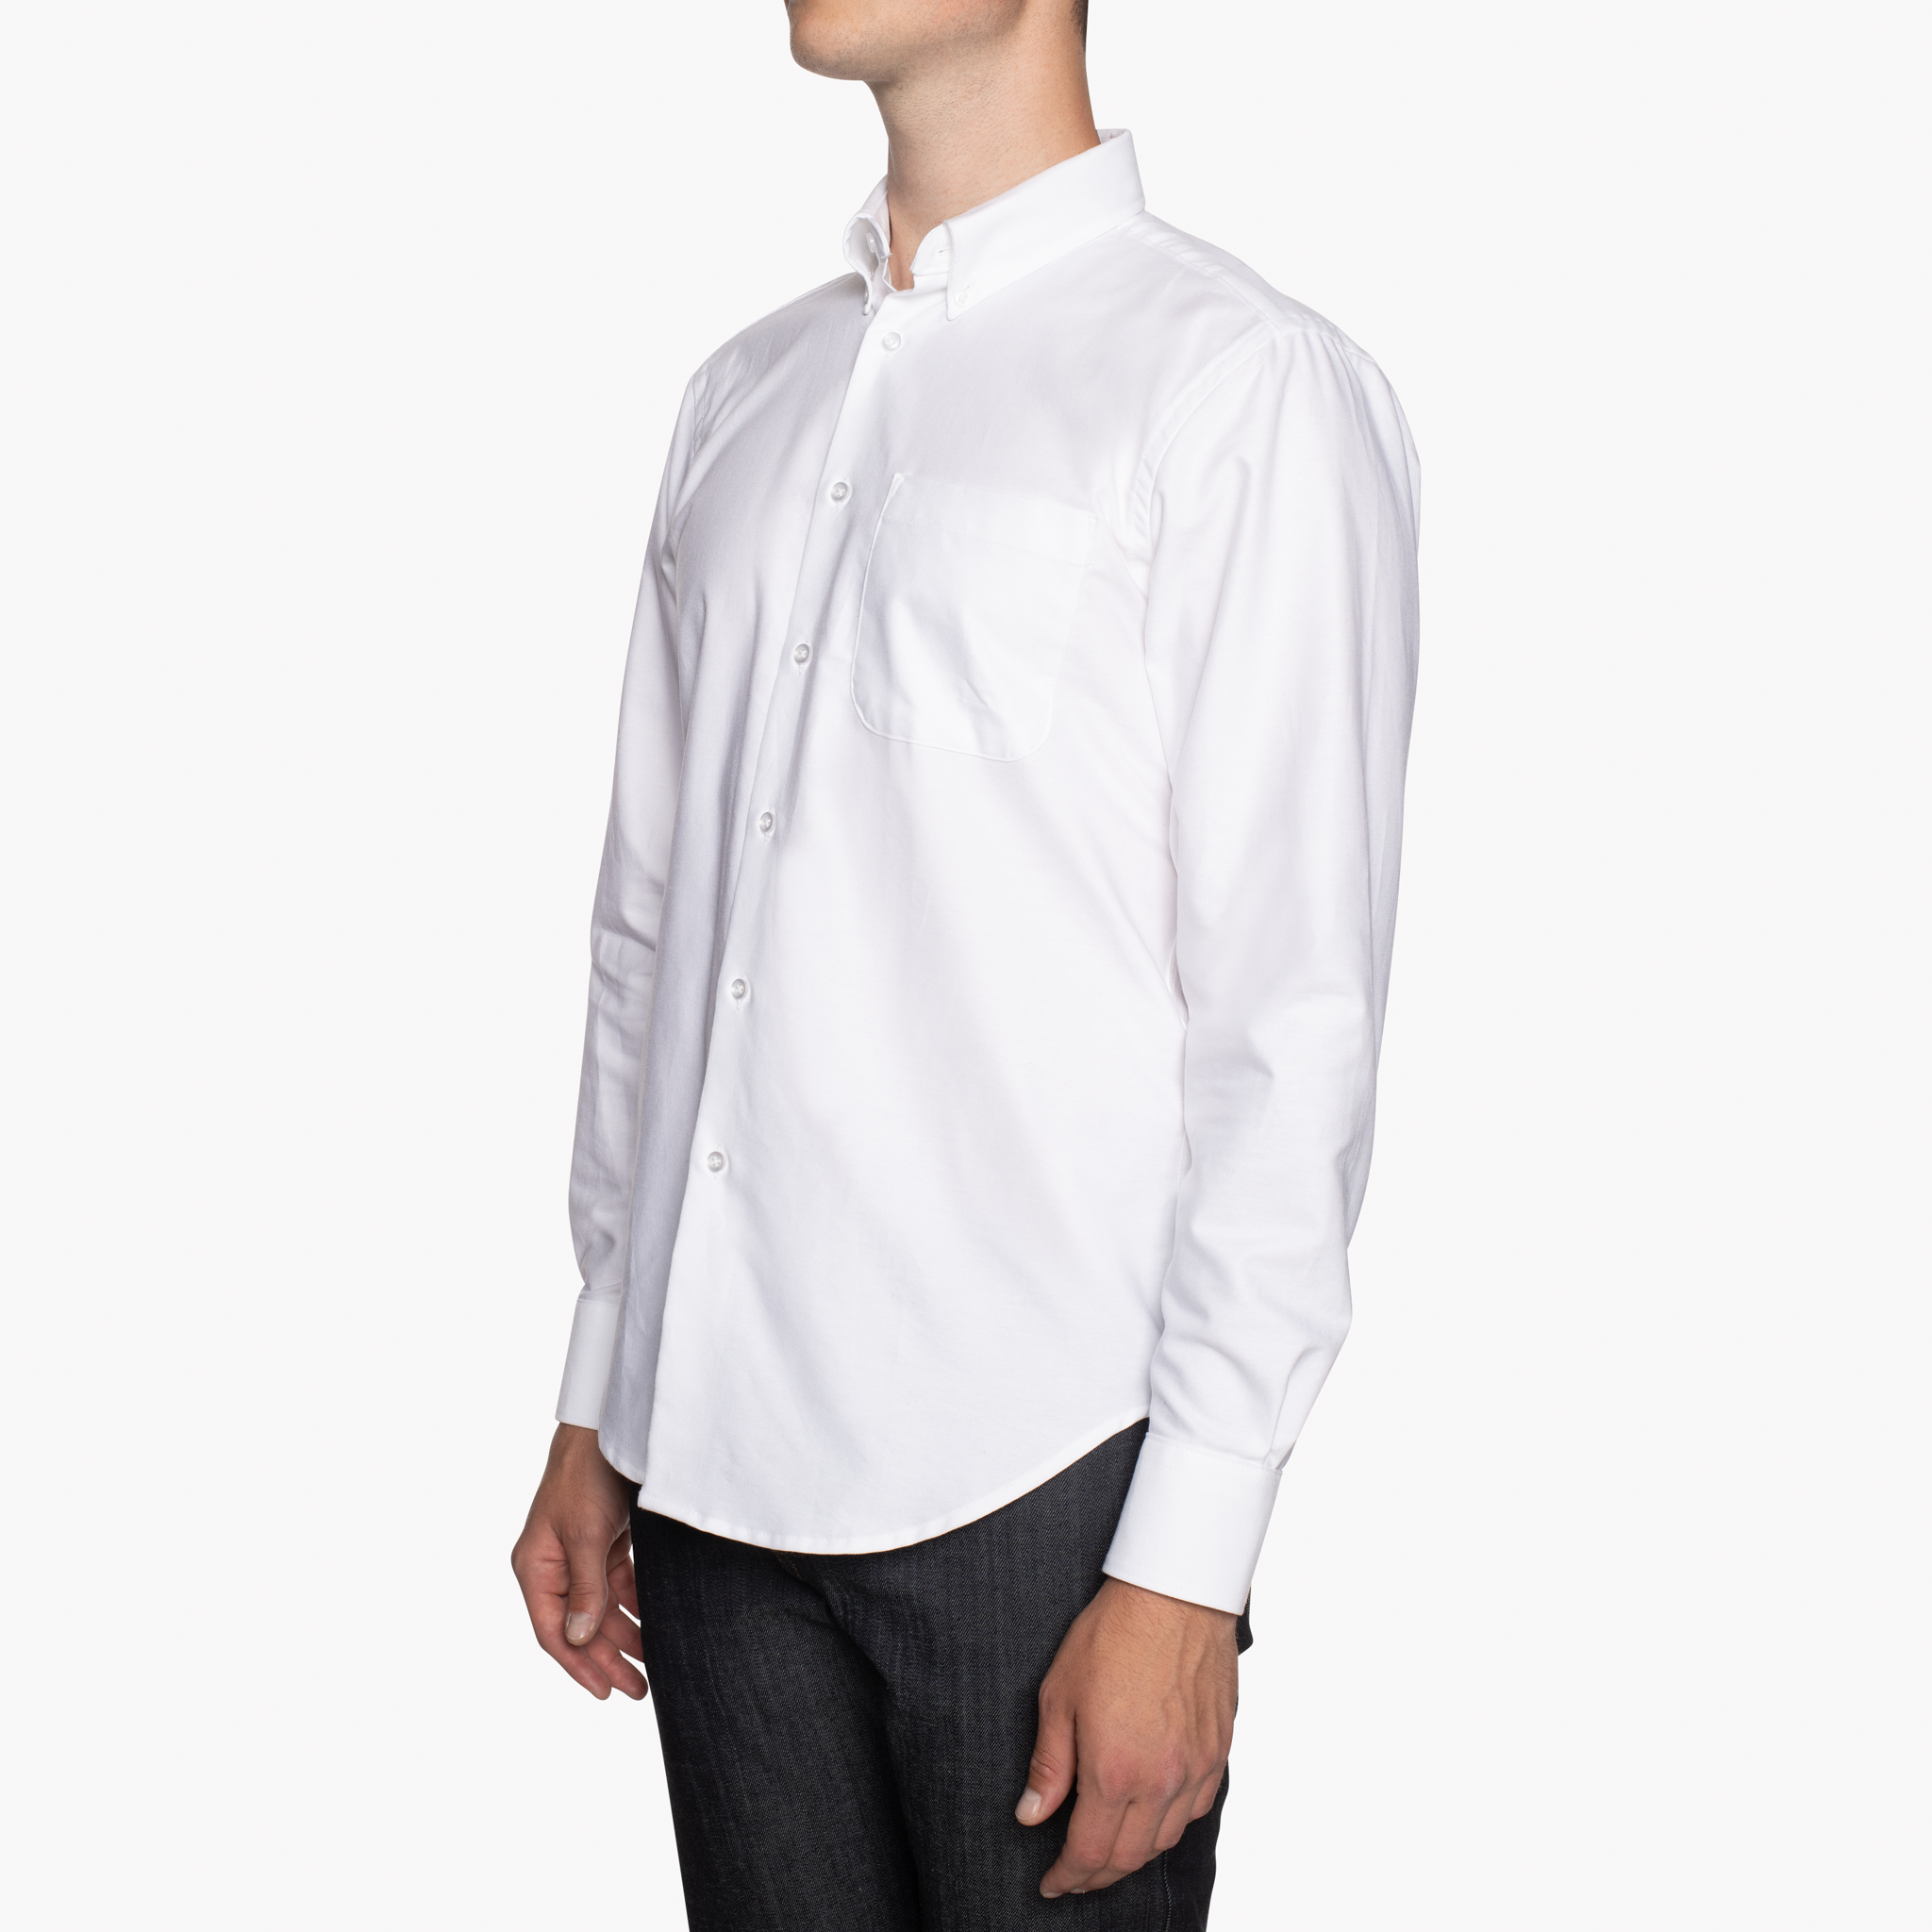  Easy Shirt - Cotton Oxford - white - side 